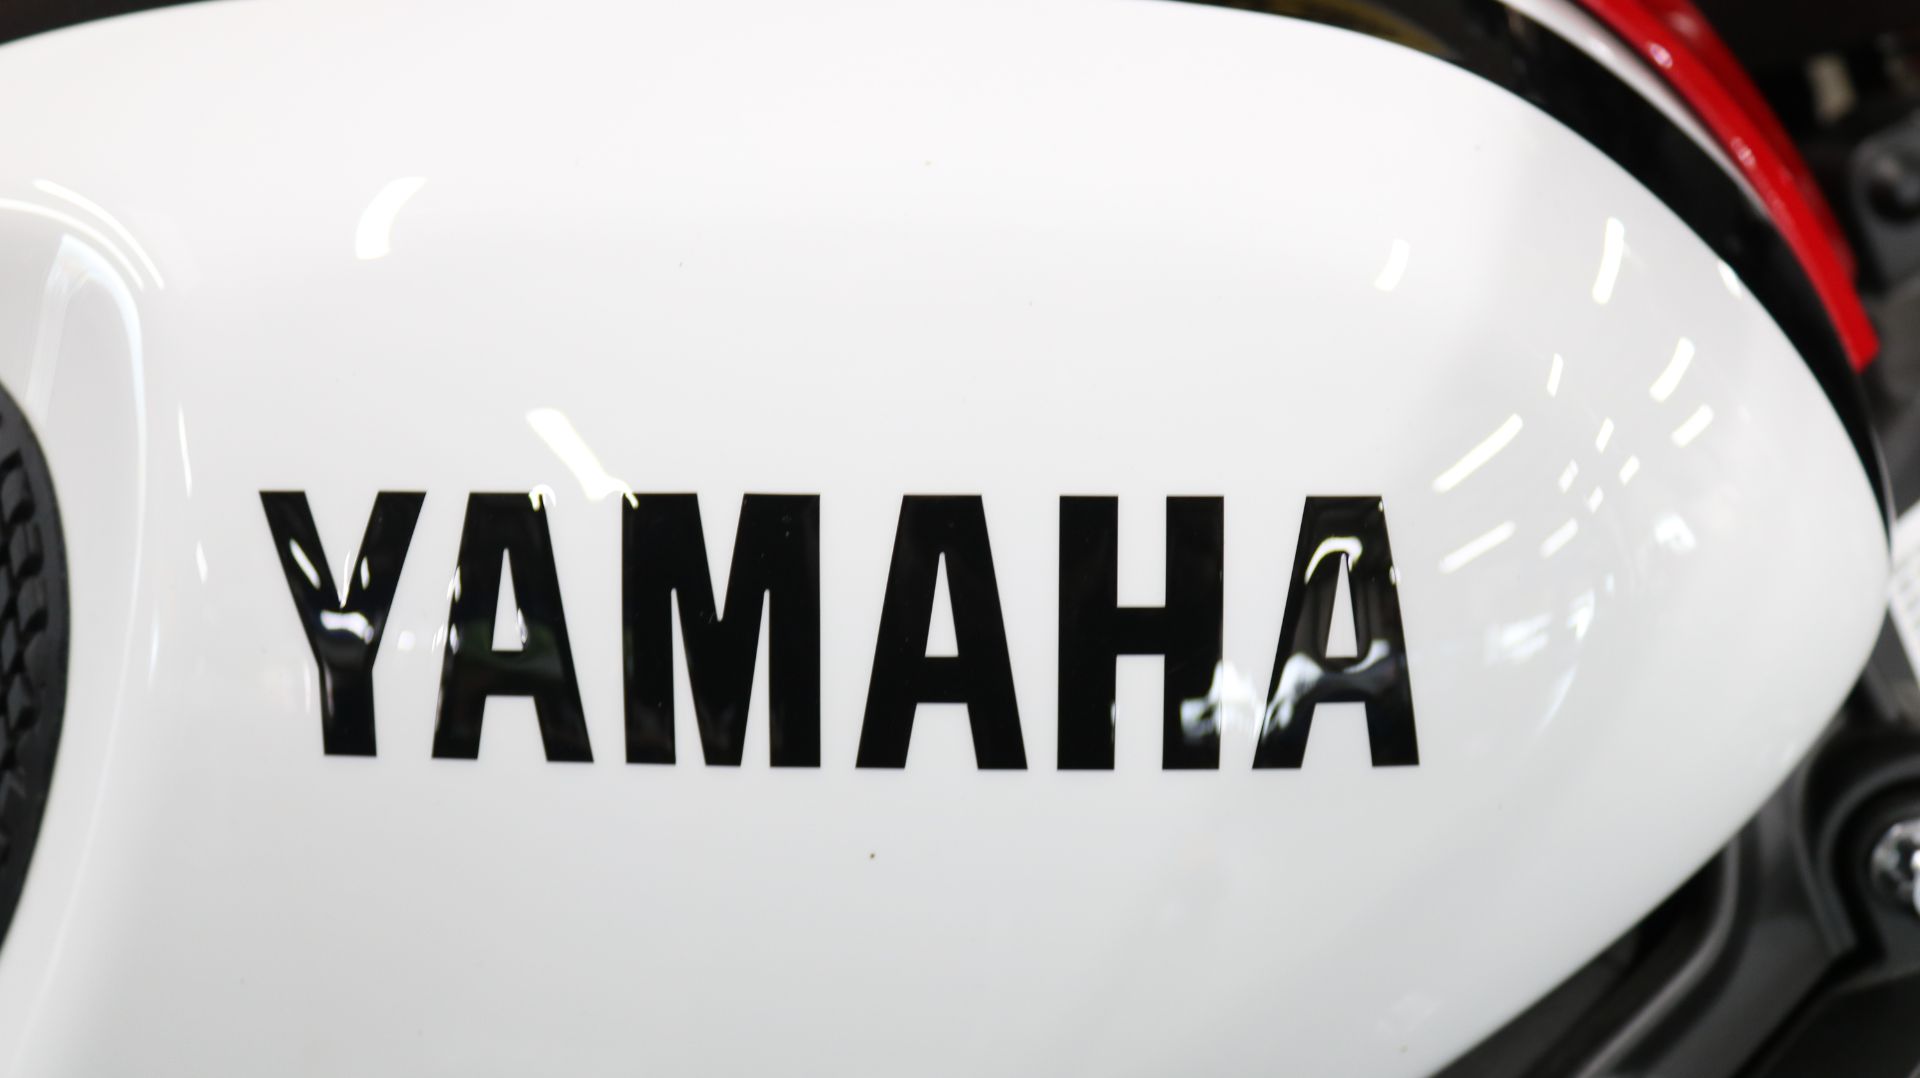 2021 Yamaha XSR900 in Grimes, Iowa - Photo 13